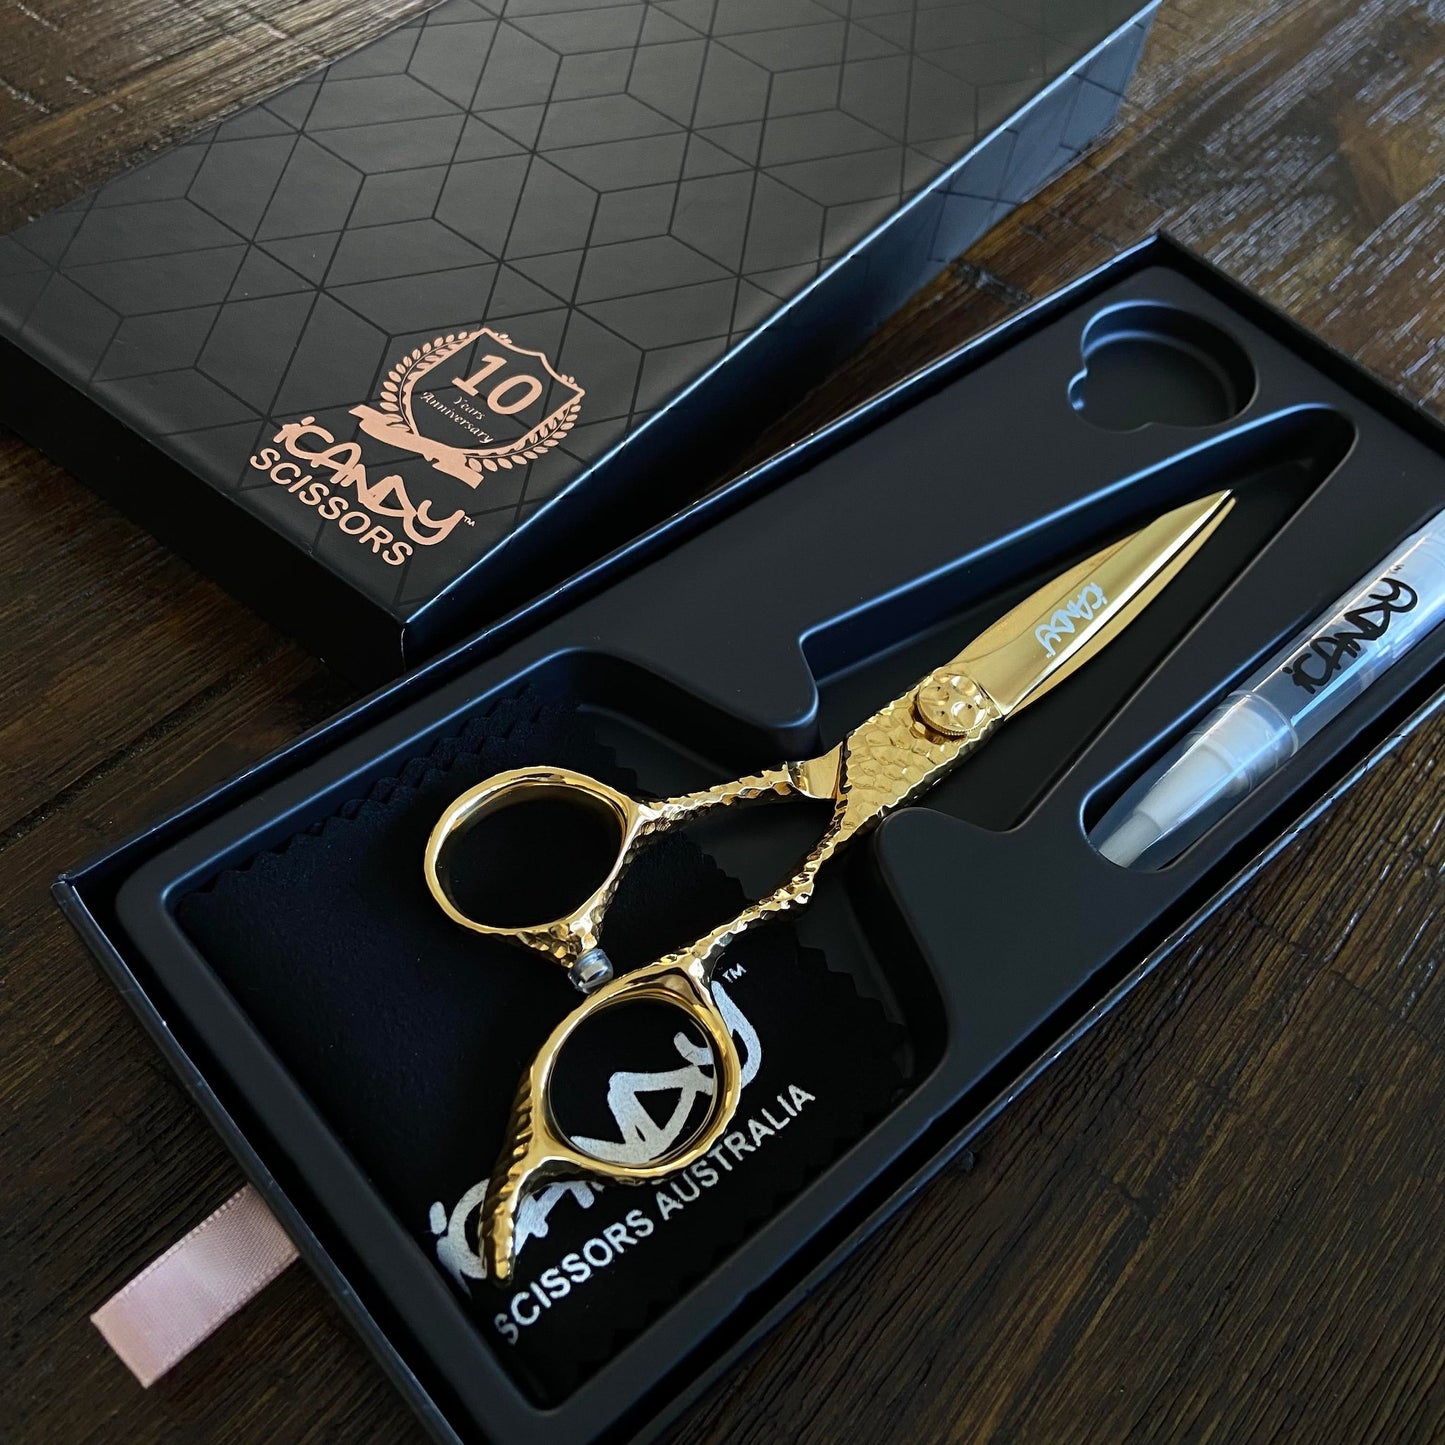 iCandy Sword Pro Yellow Gold VG10 6.1" 10 Years Anniversary Edition Scissors Open Box